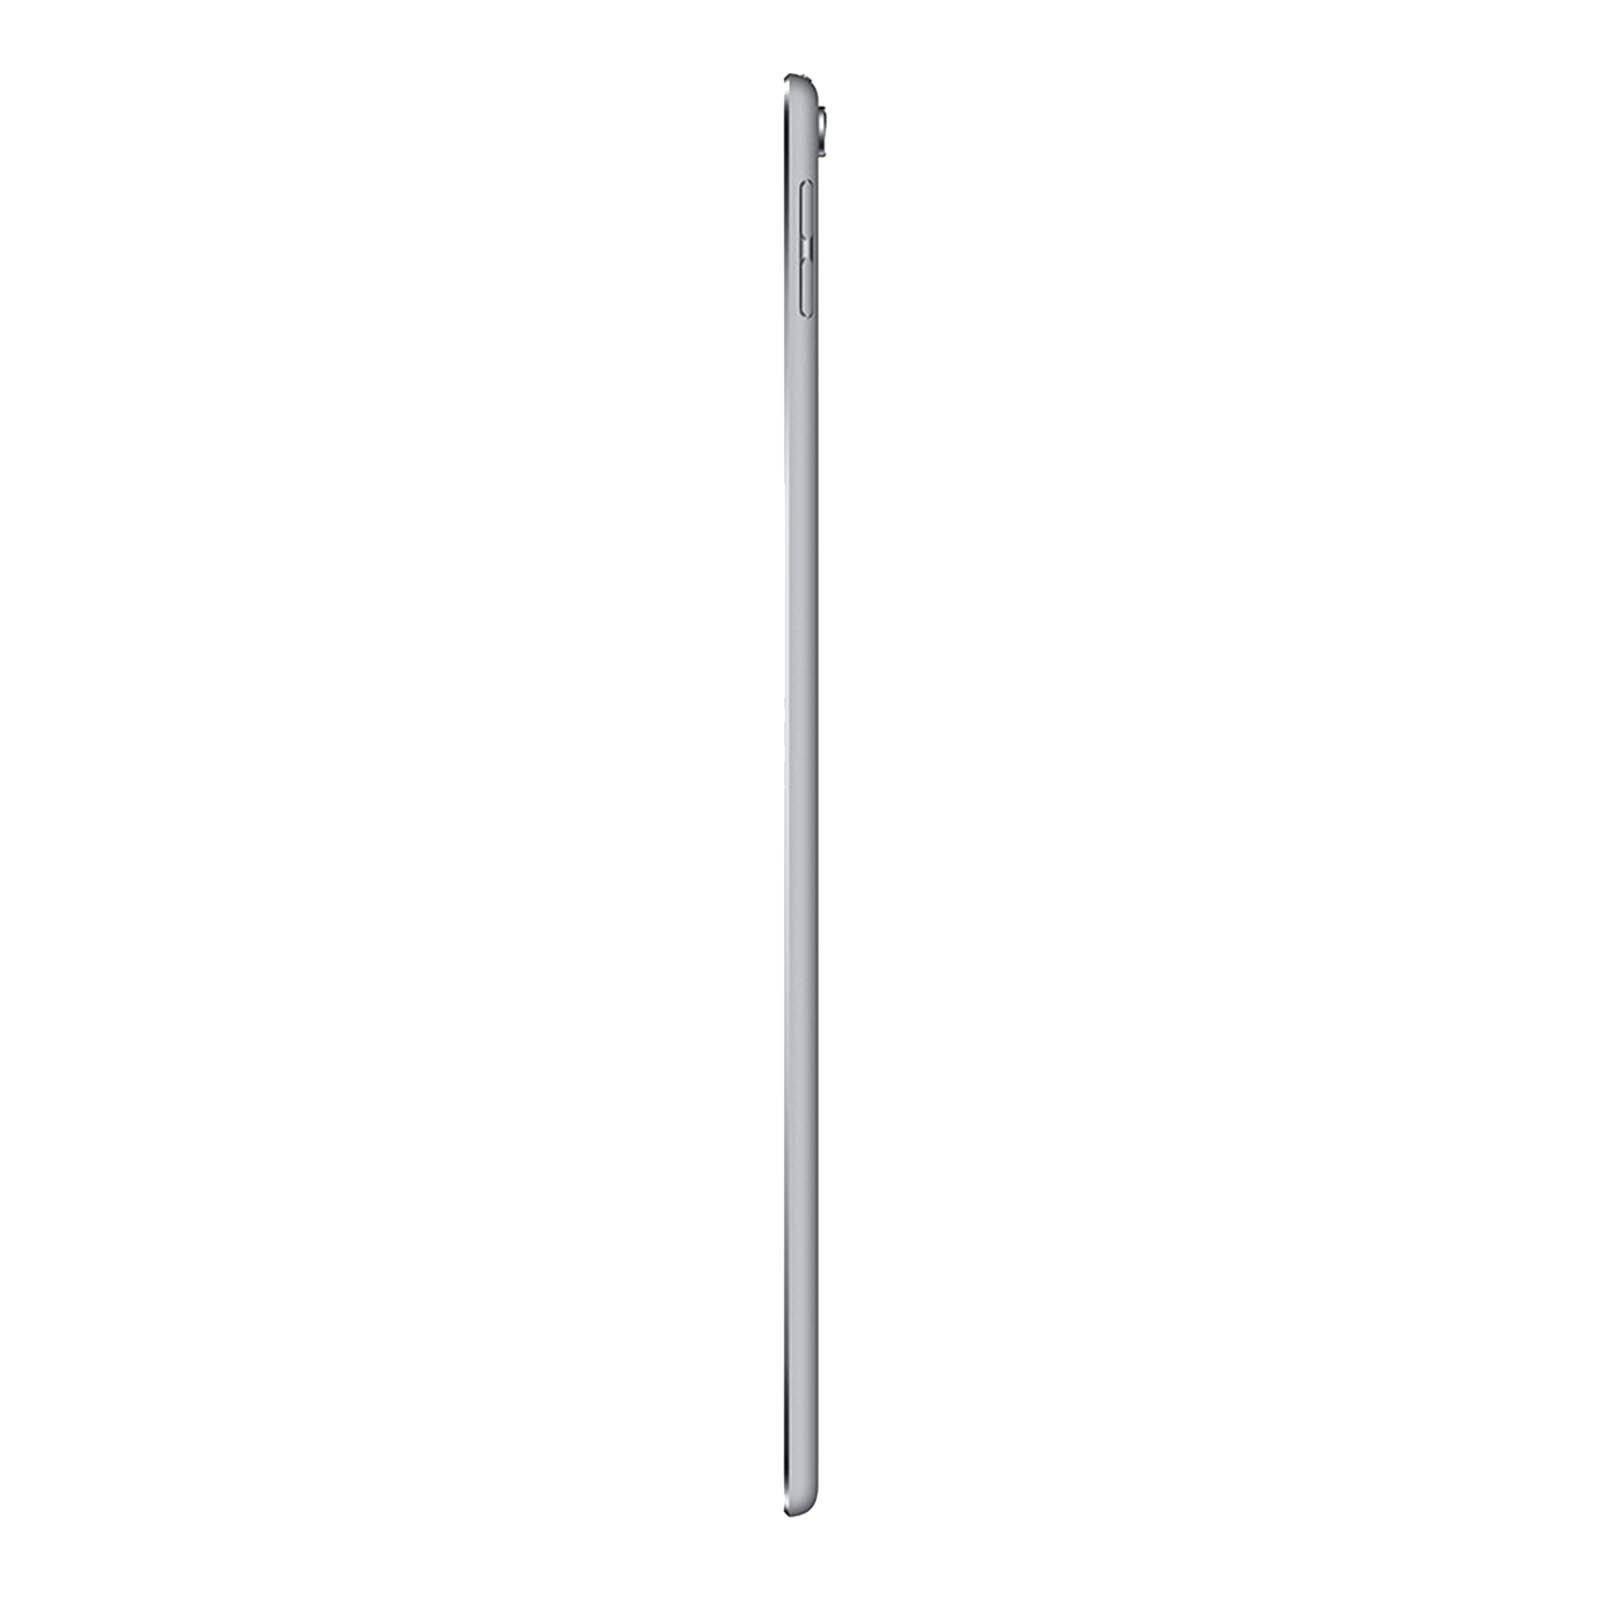 iPad Pro 10.5 Inch 256GB Space Grey Very Good - Unlocked